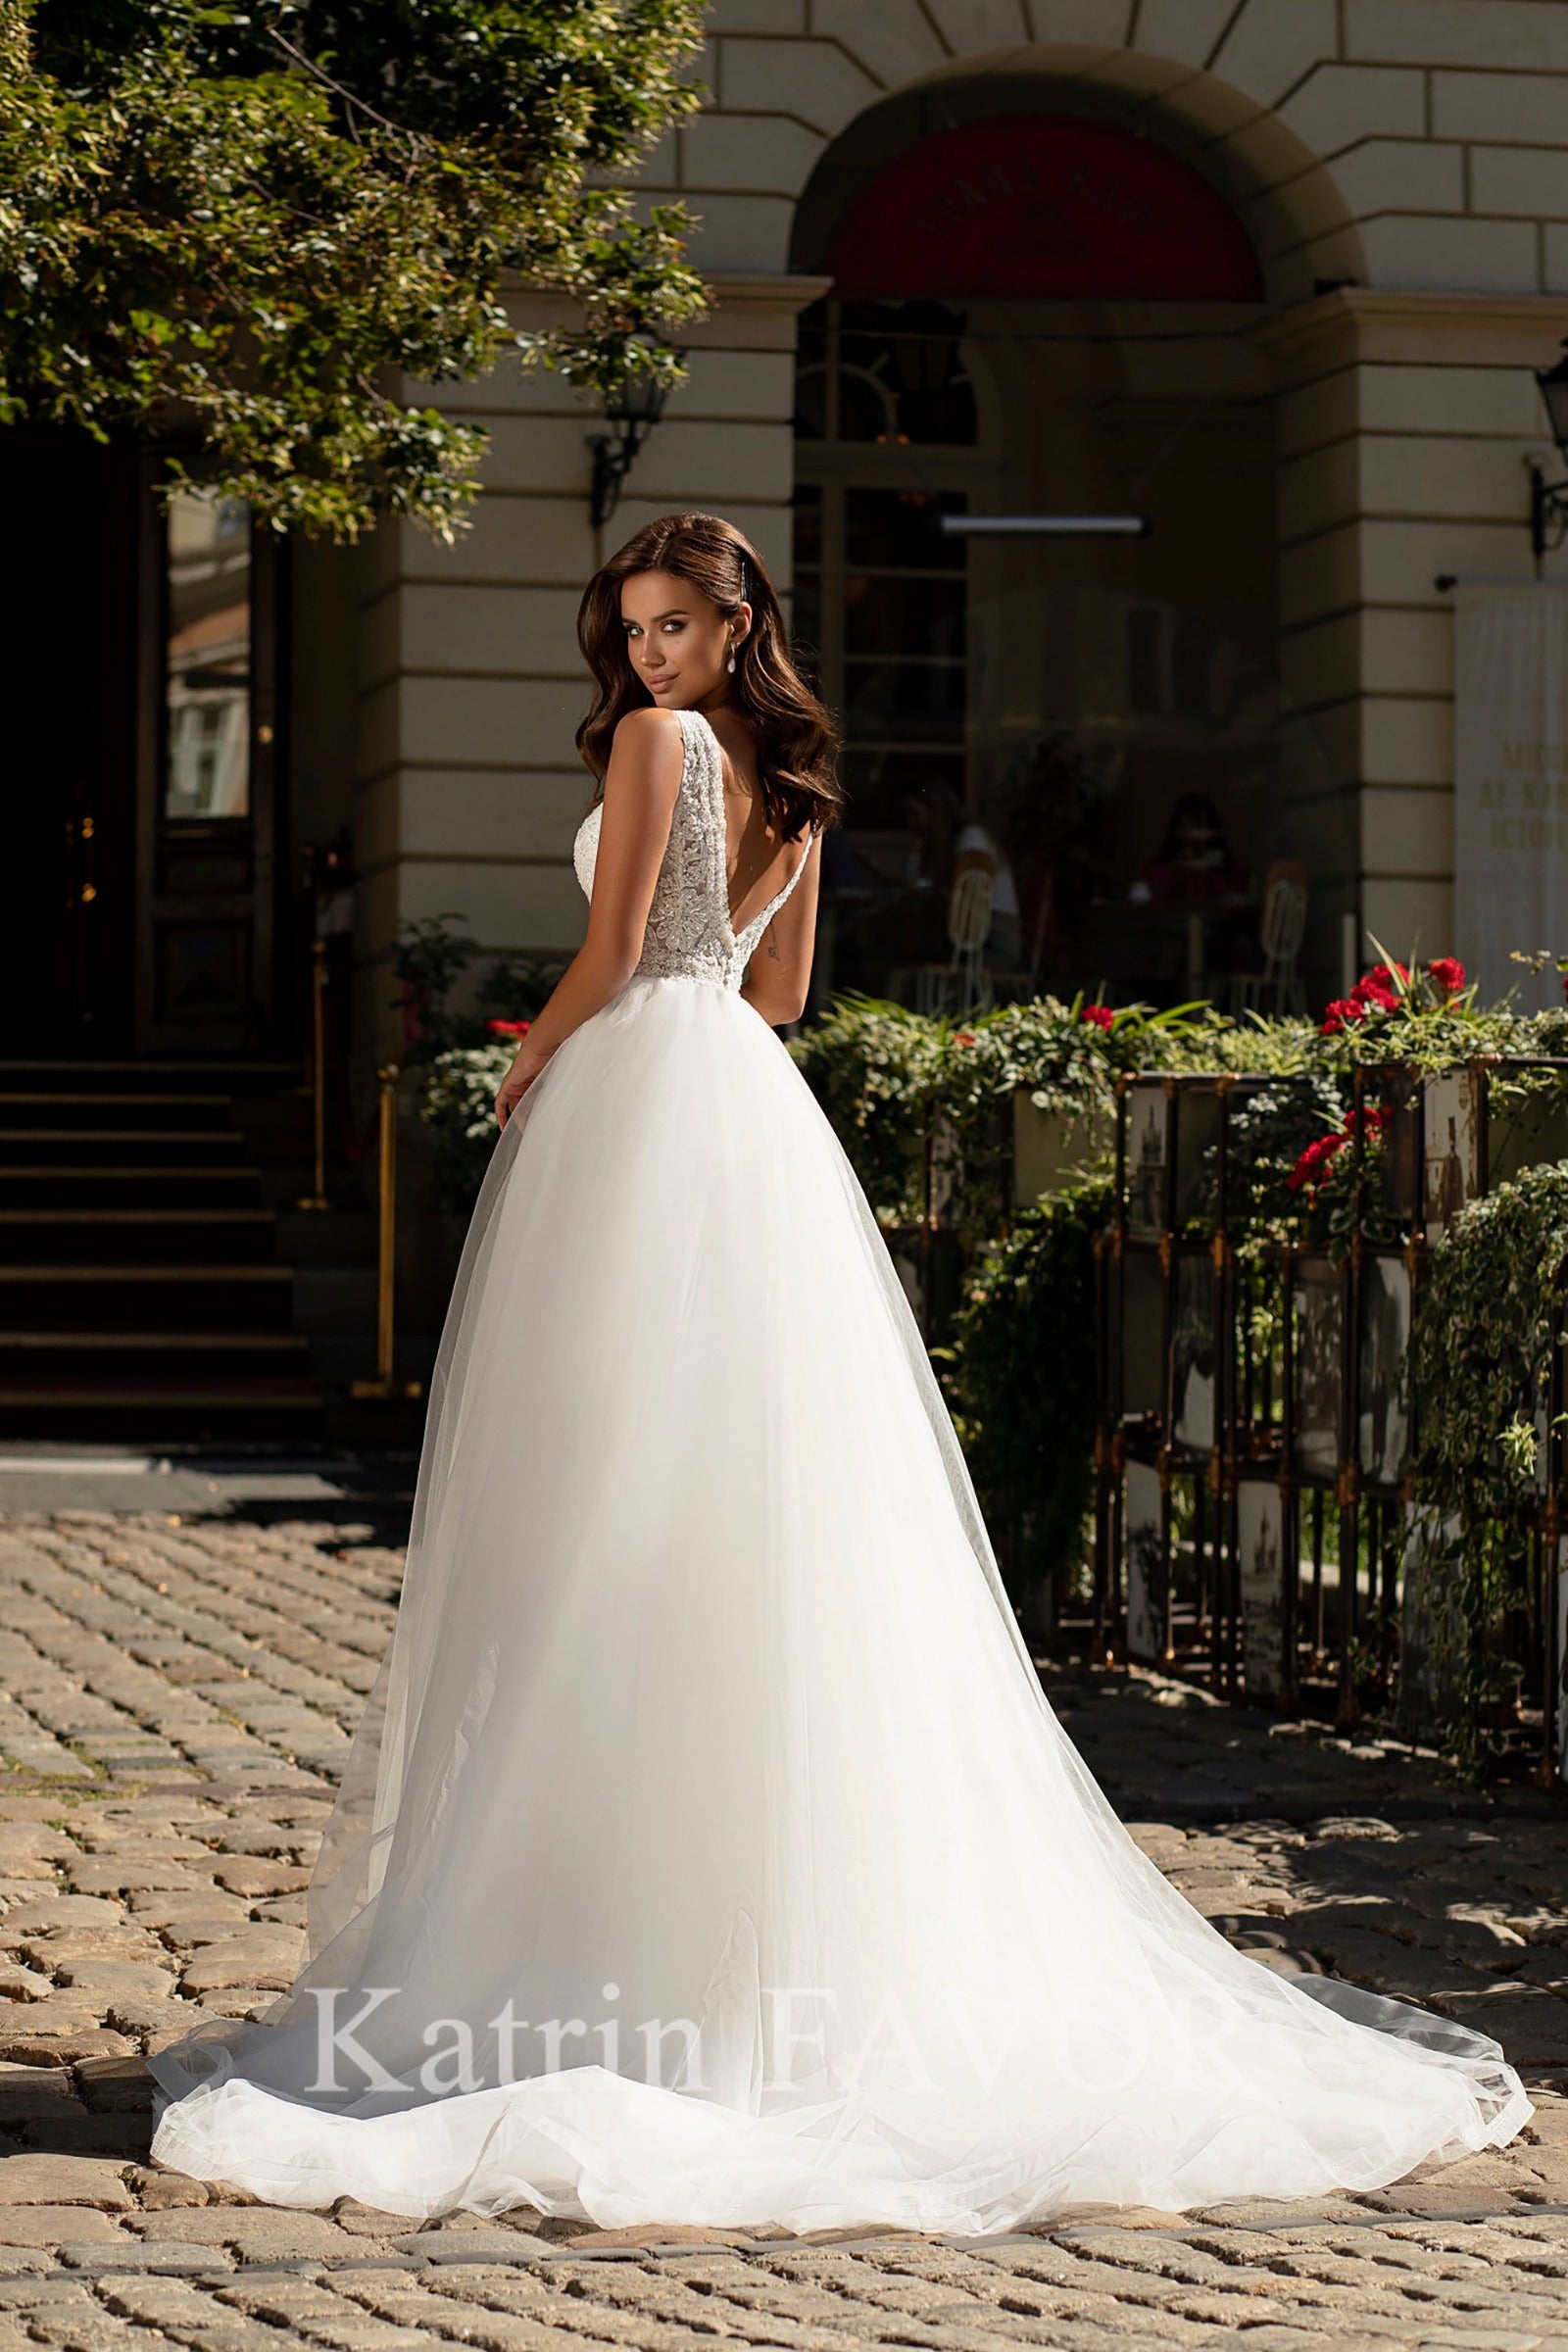 KatrinFAVORboutique-Simple a-line tulle wedding dress